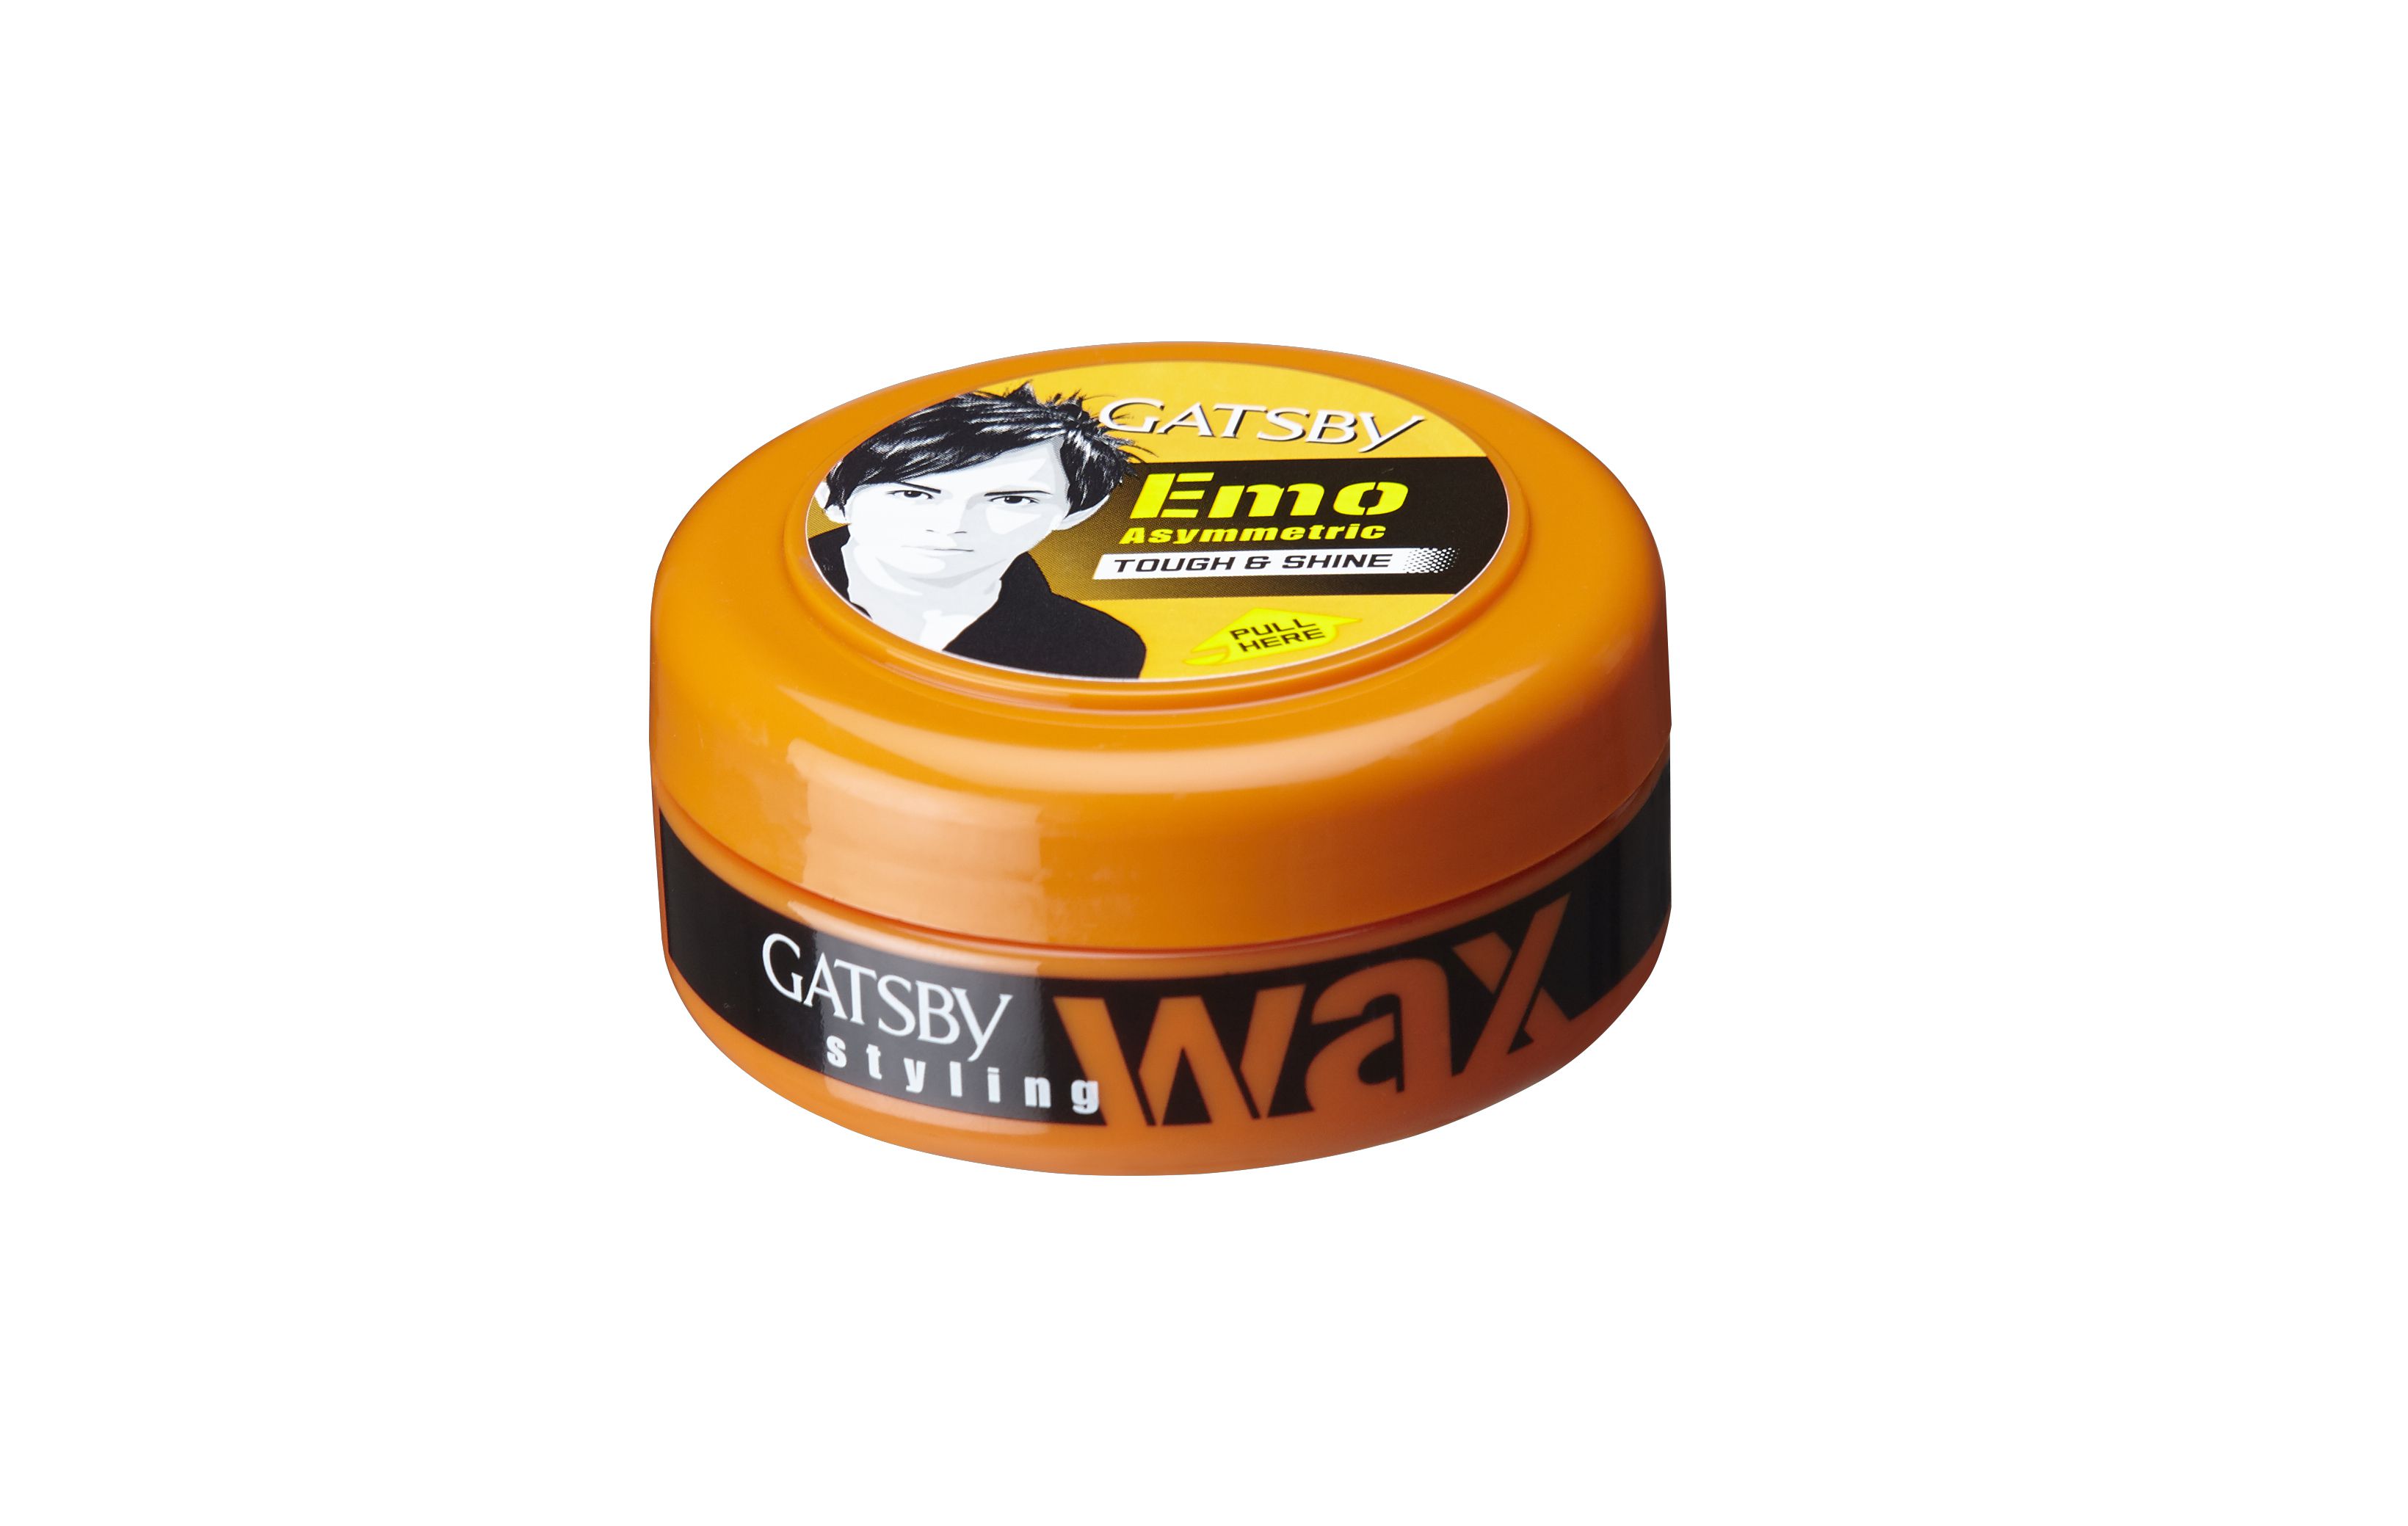 Gatsby Wax Tough & Shine Hair Stylers-75g: Buy Gatsby Wax ...